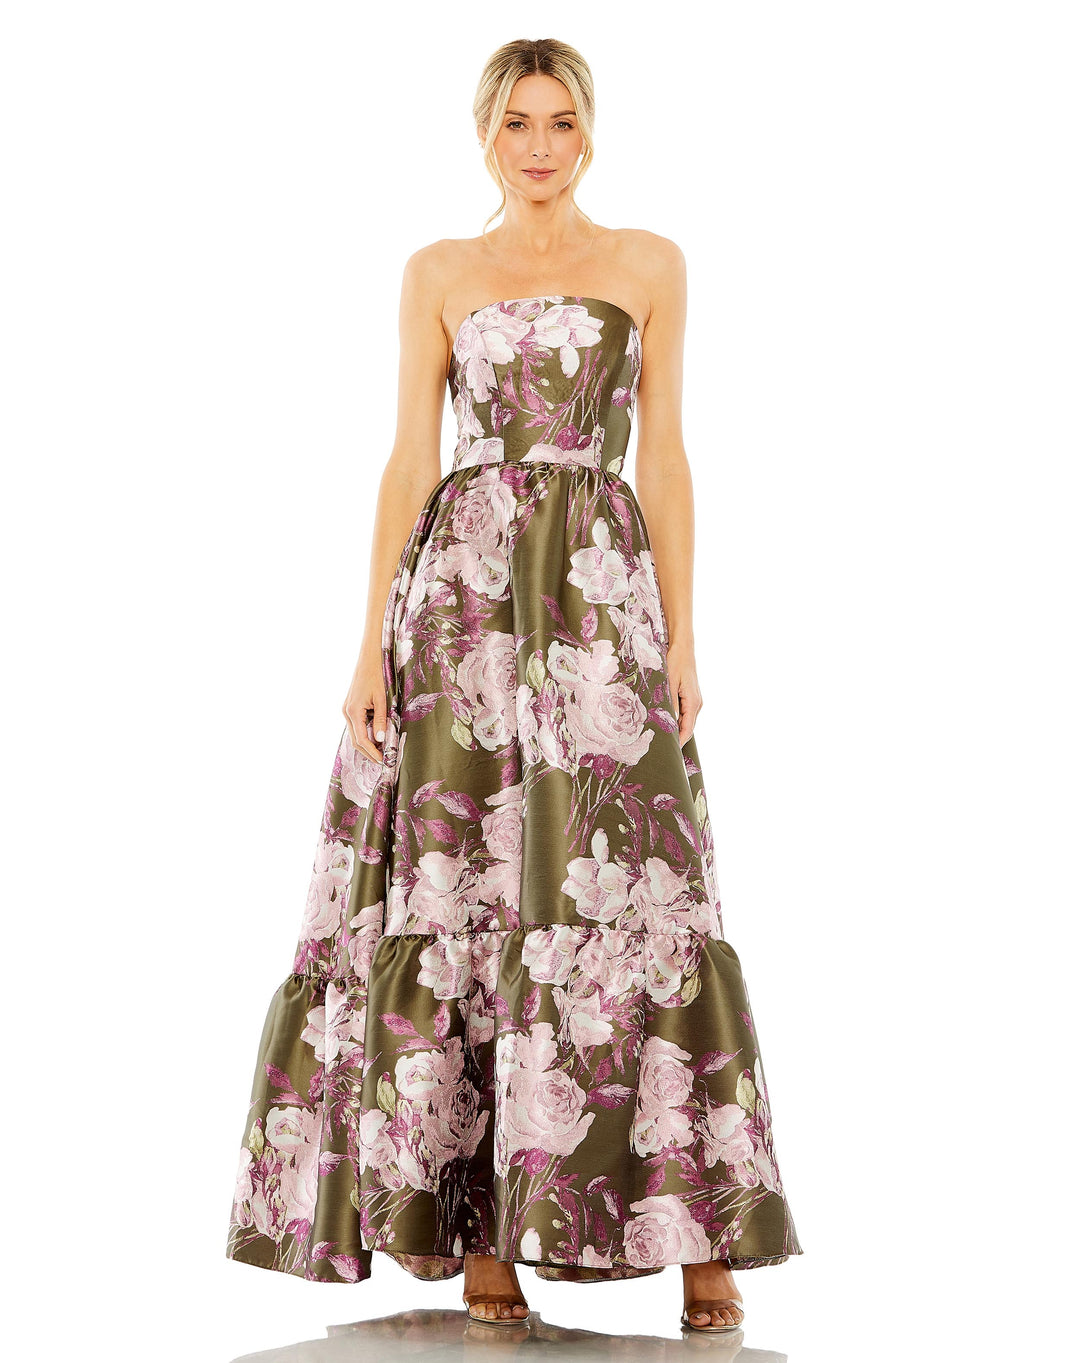 Strapless Bottom Ruffle Floral Dress – Mac Duggal